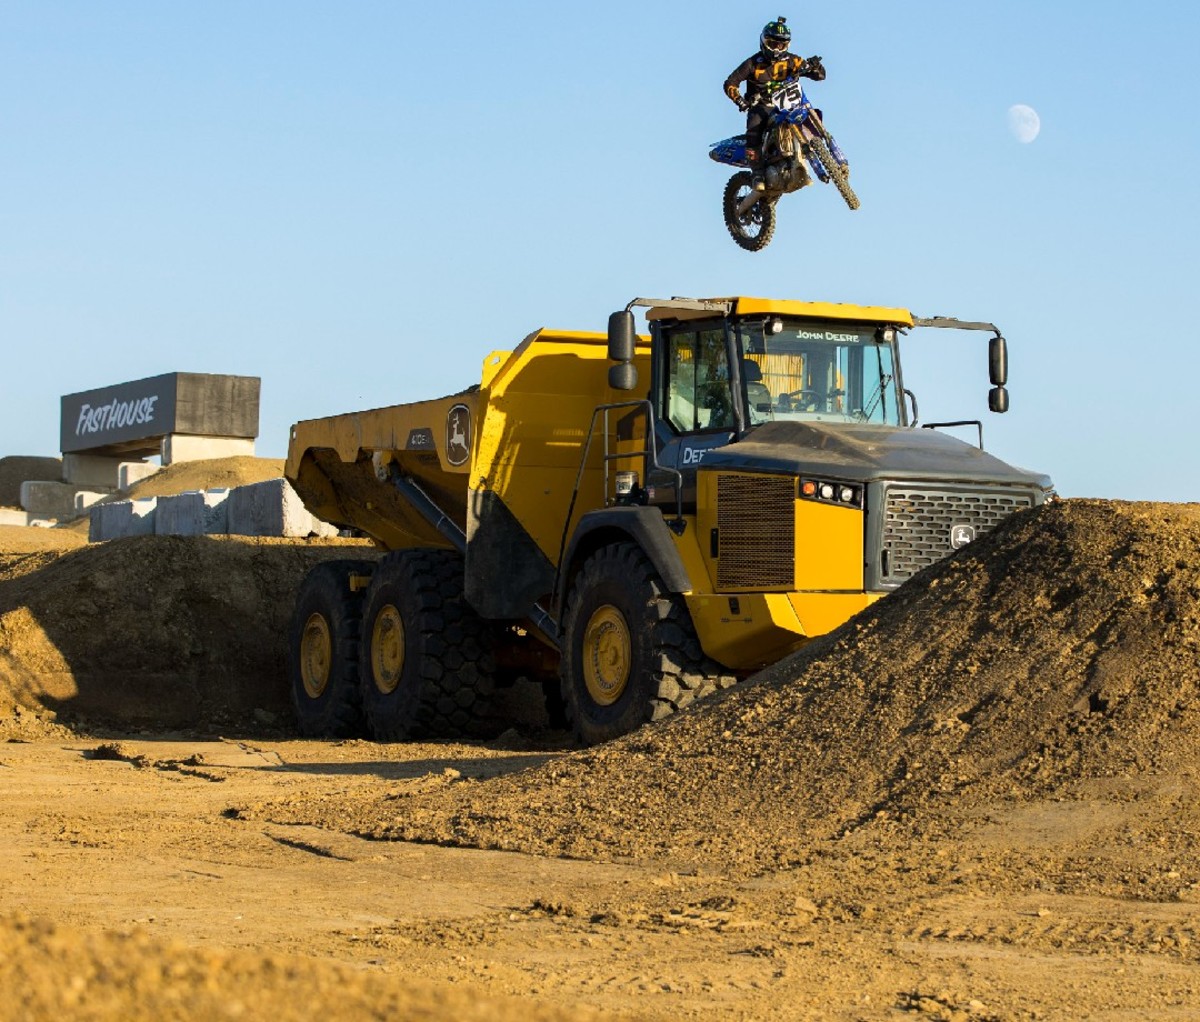 Motocross racer jumping dumptruck